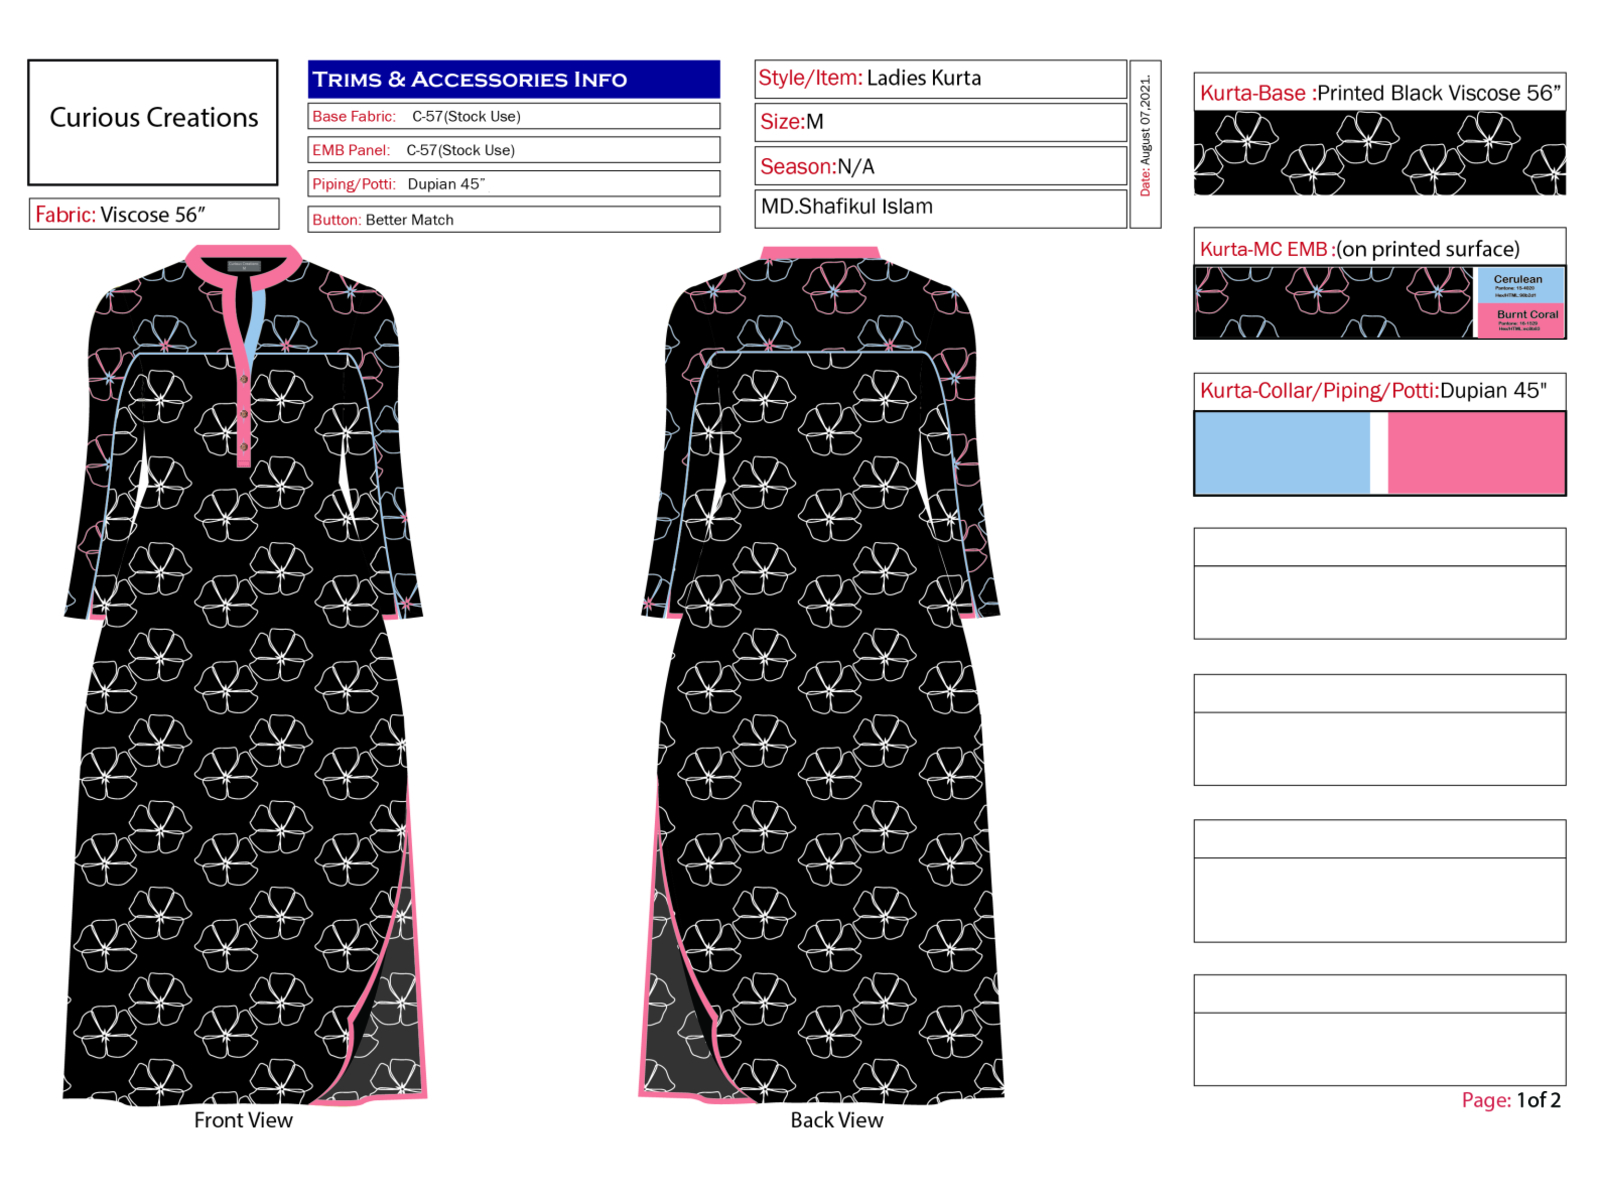 Buy Wedding Dress Illustration Custom Wedding Dress Sketch Online in India   Etsy